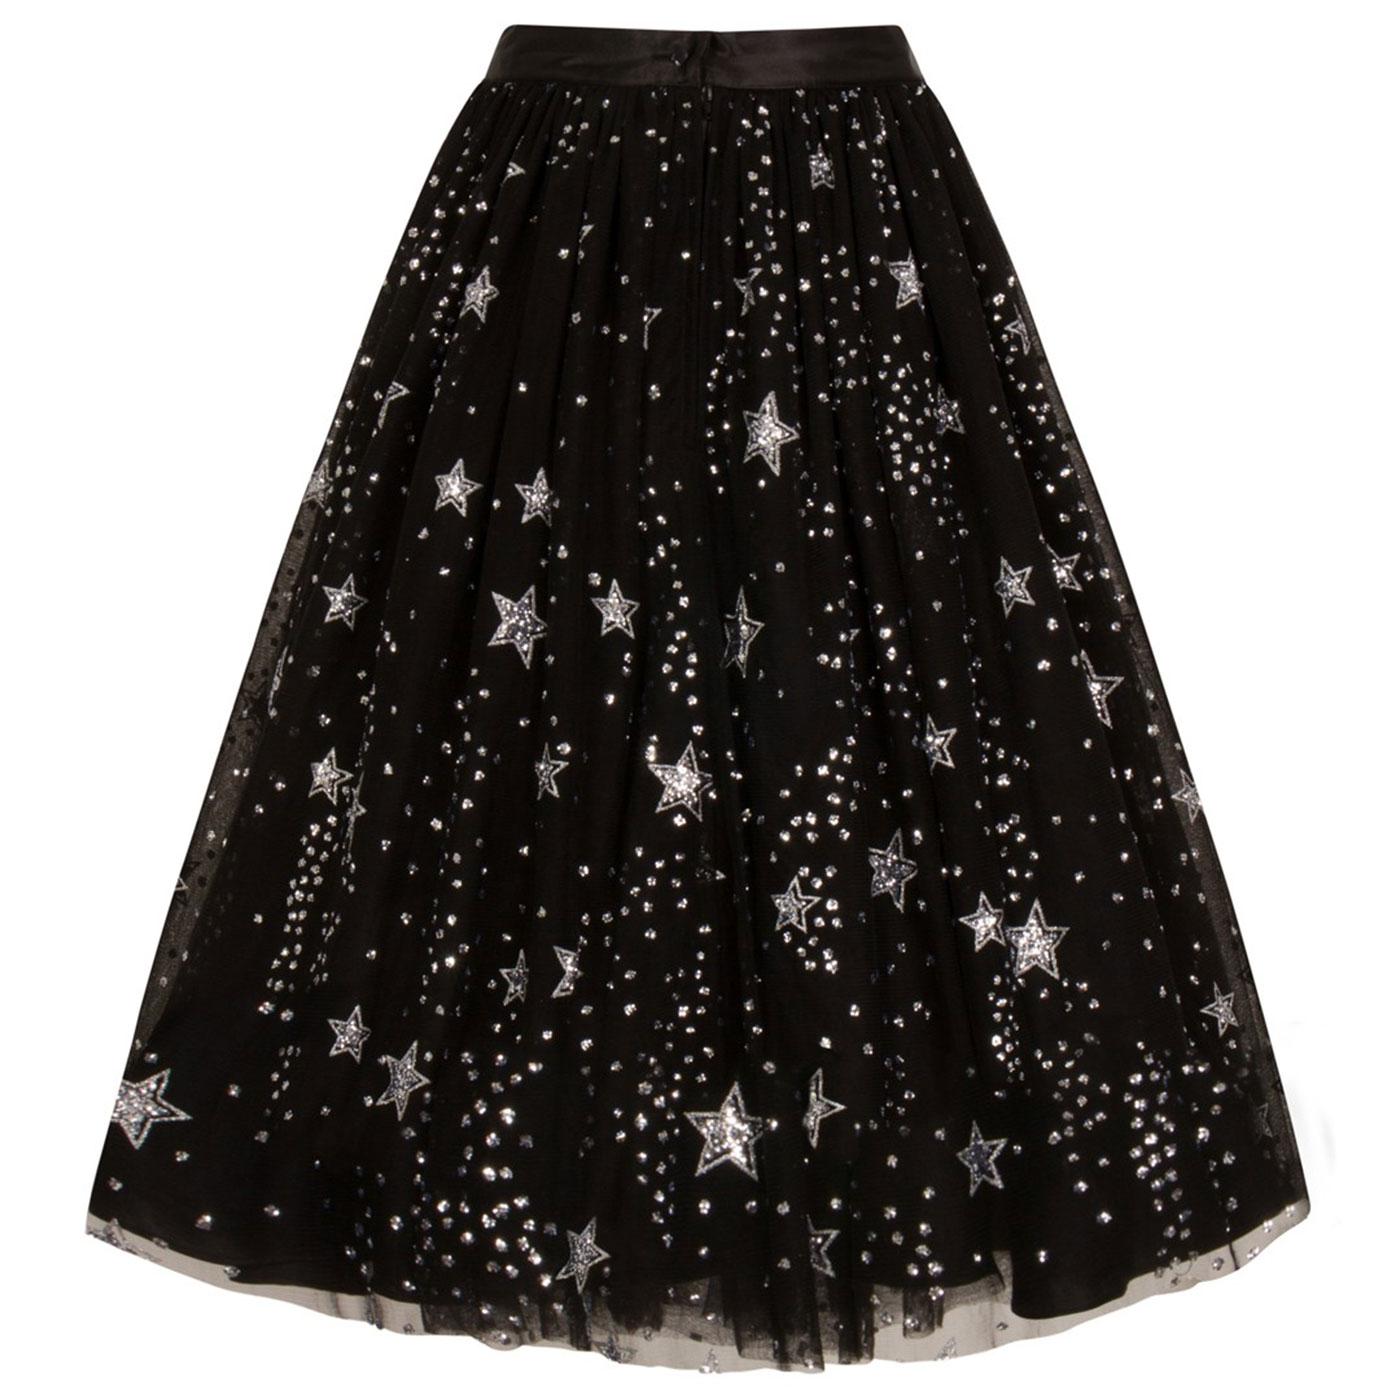 HELL BUNNY Cosmic Love Vintage Stars Tulle Skirt in Black